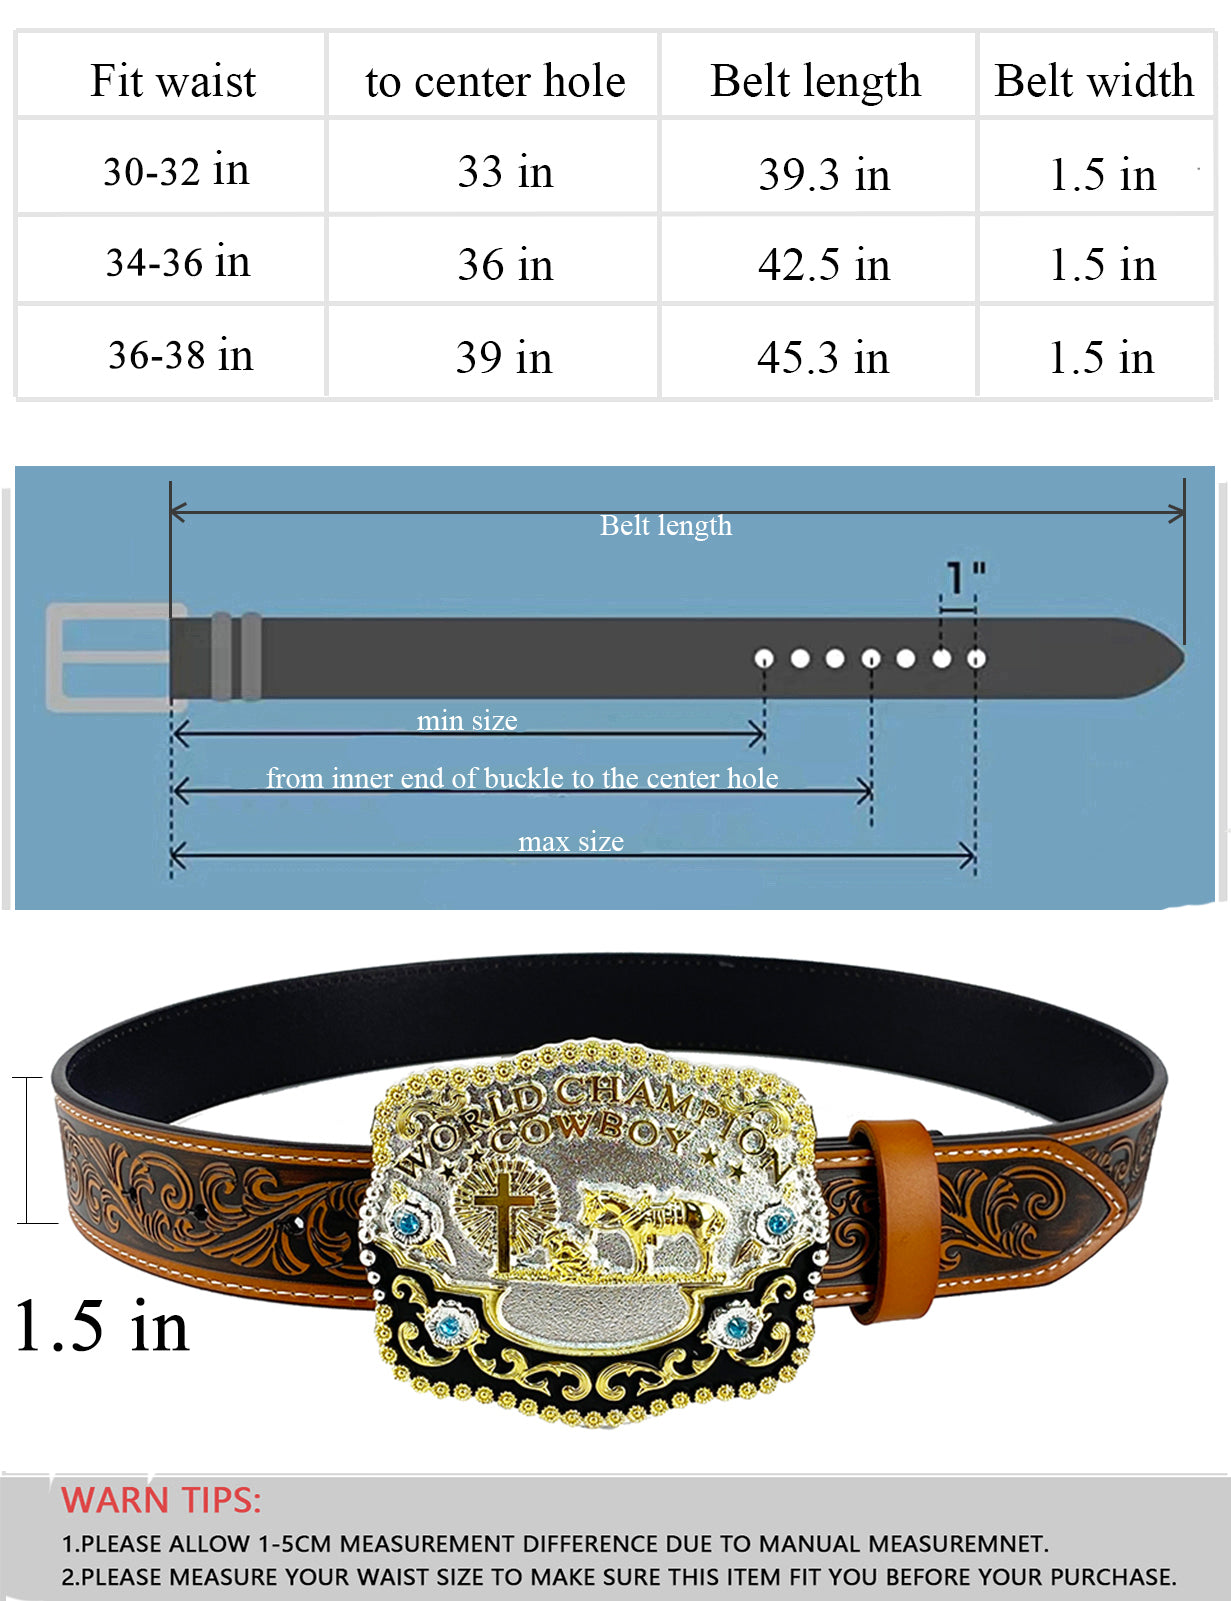 TOPACC Western Genuine Leather Pattern Tooled Belt-3D Cross Horses Prayer 'world champion cowboy' Hebilla